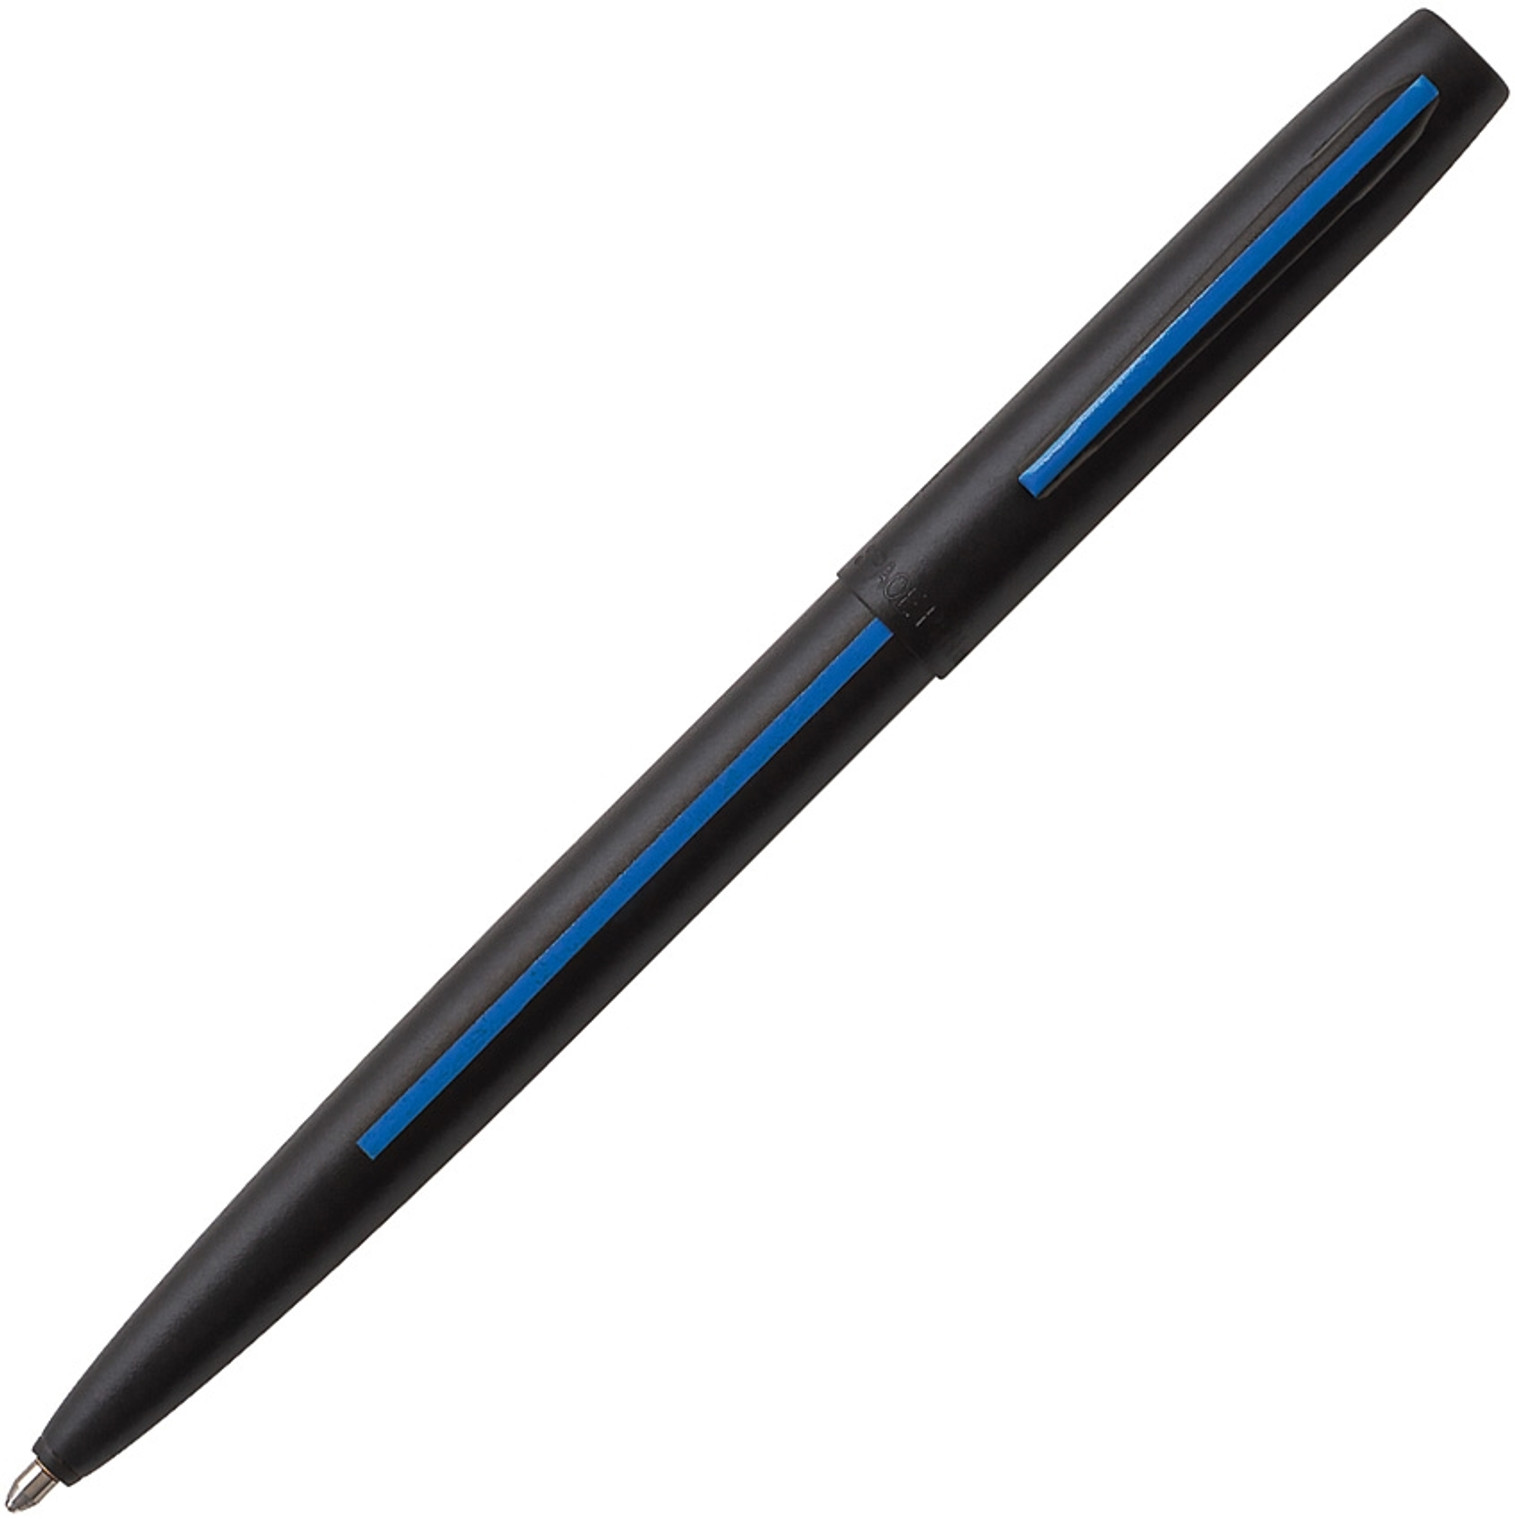 Cap-O-Matic and Stylus Pen - Hero Outdoors